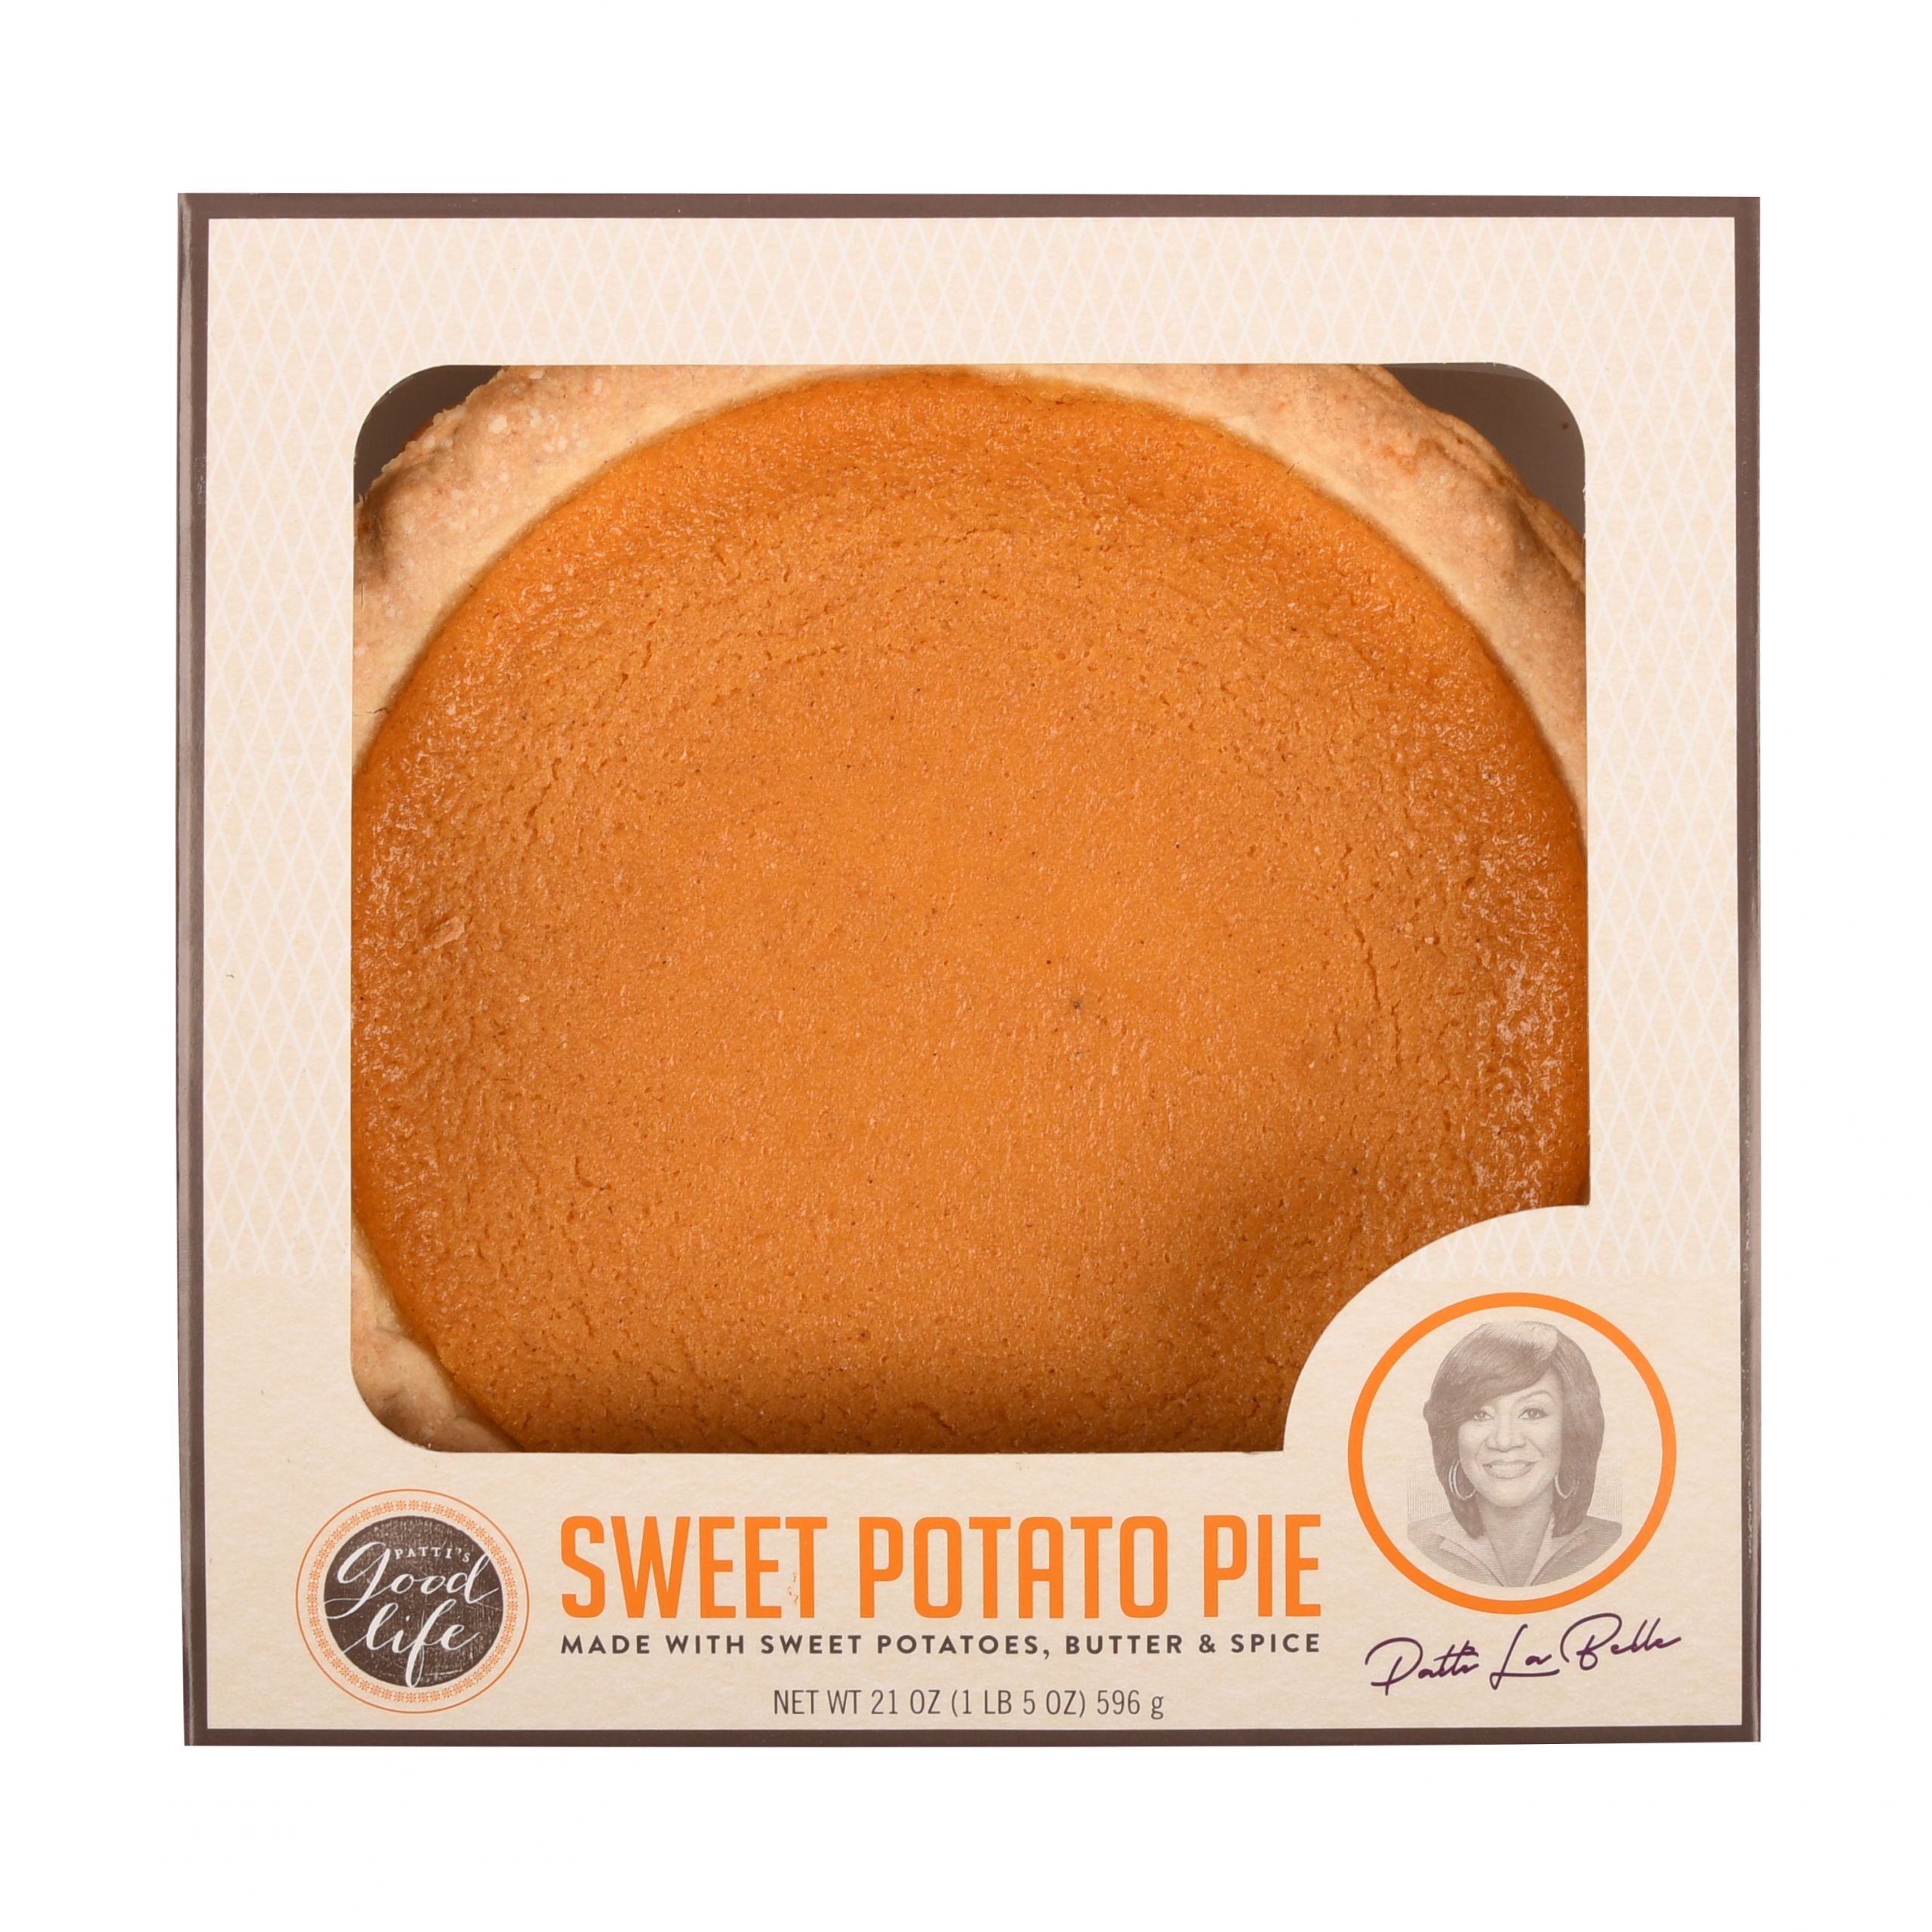 Pattie Labelle Sweet Potato Pie
 Patti s Good Life by Patti LaBelle Sweet Potato Pie 21 oz